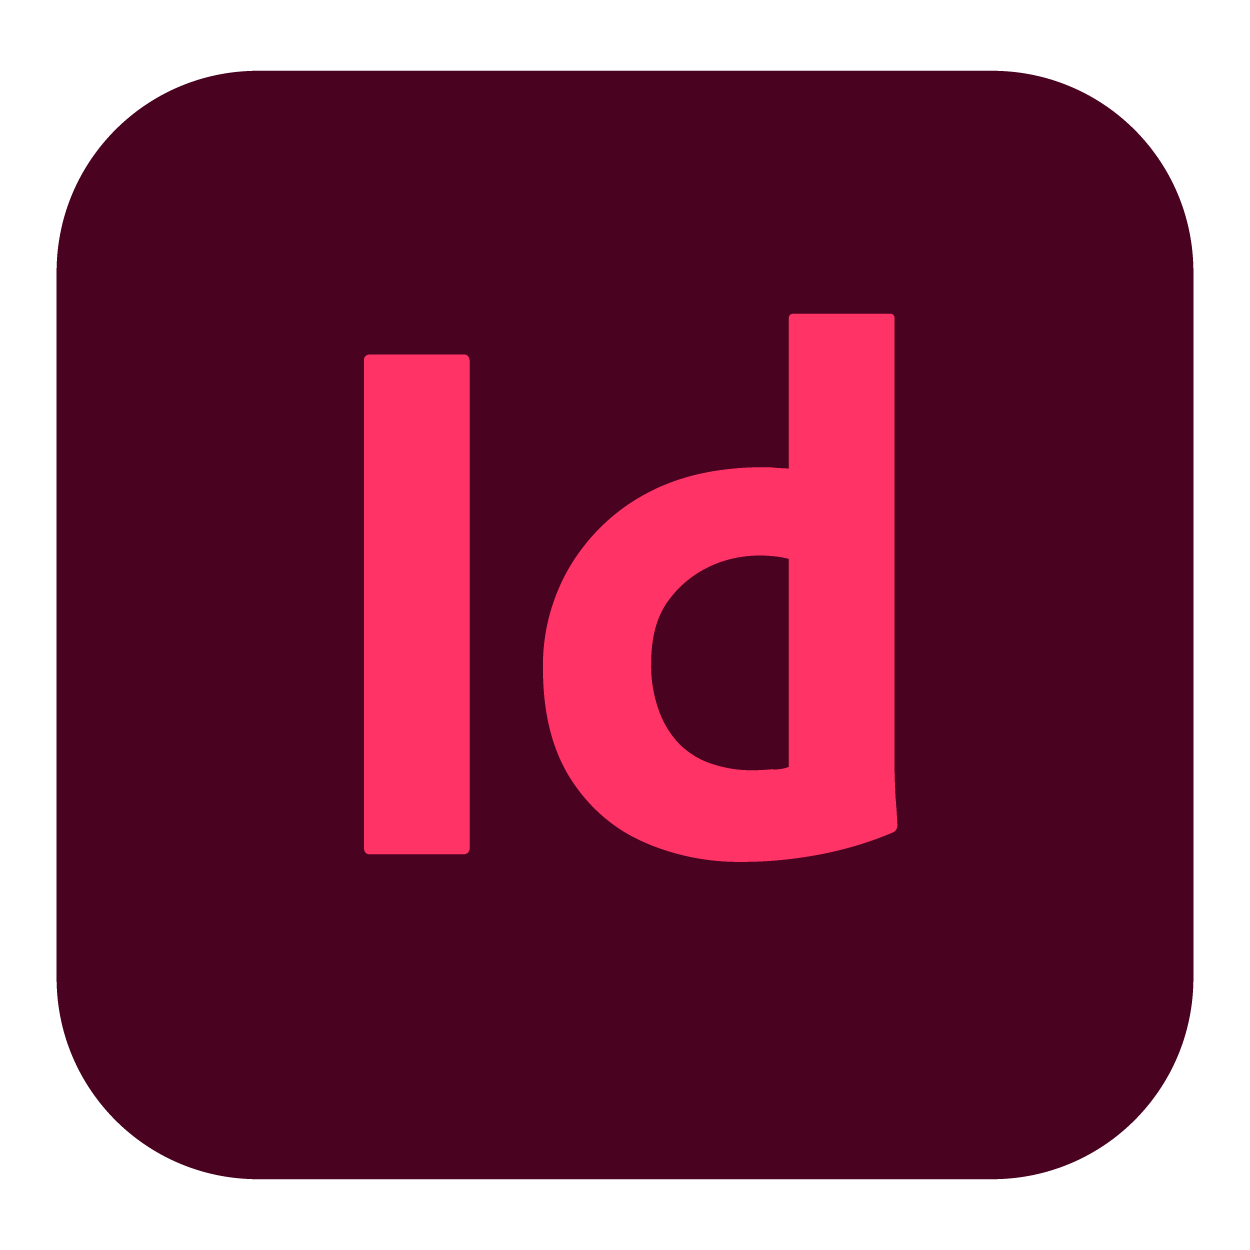 Adobe InDesign Logo png